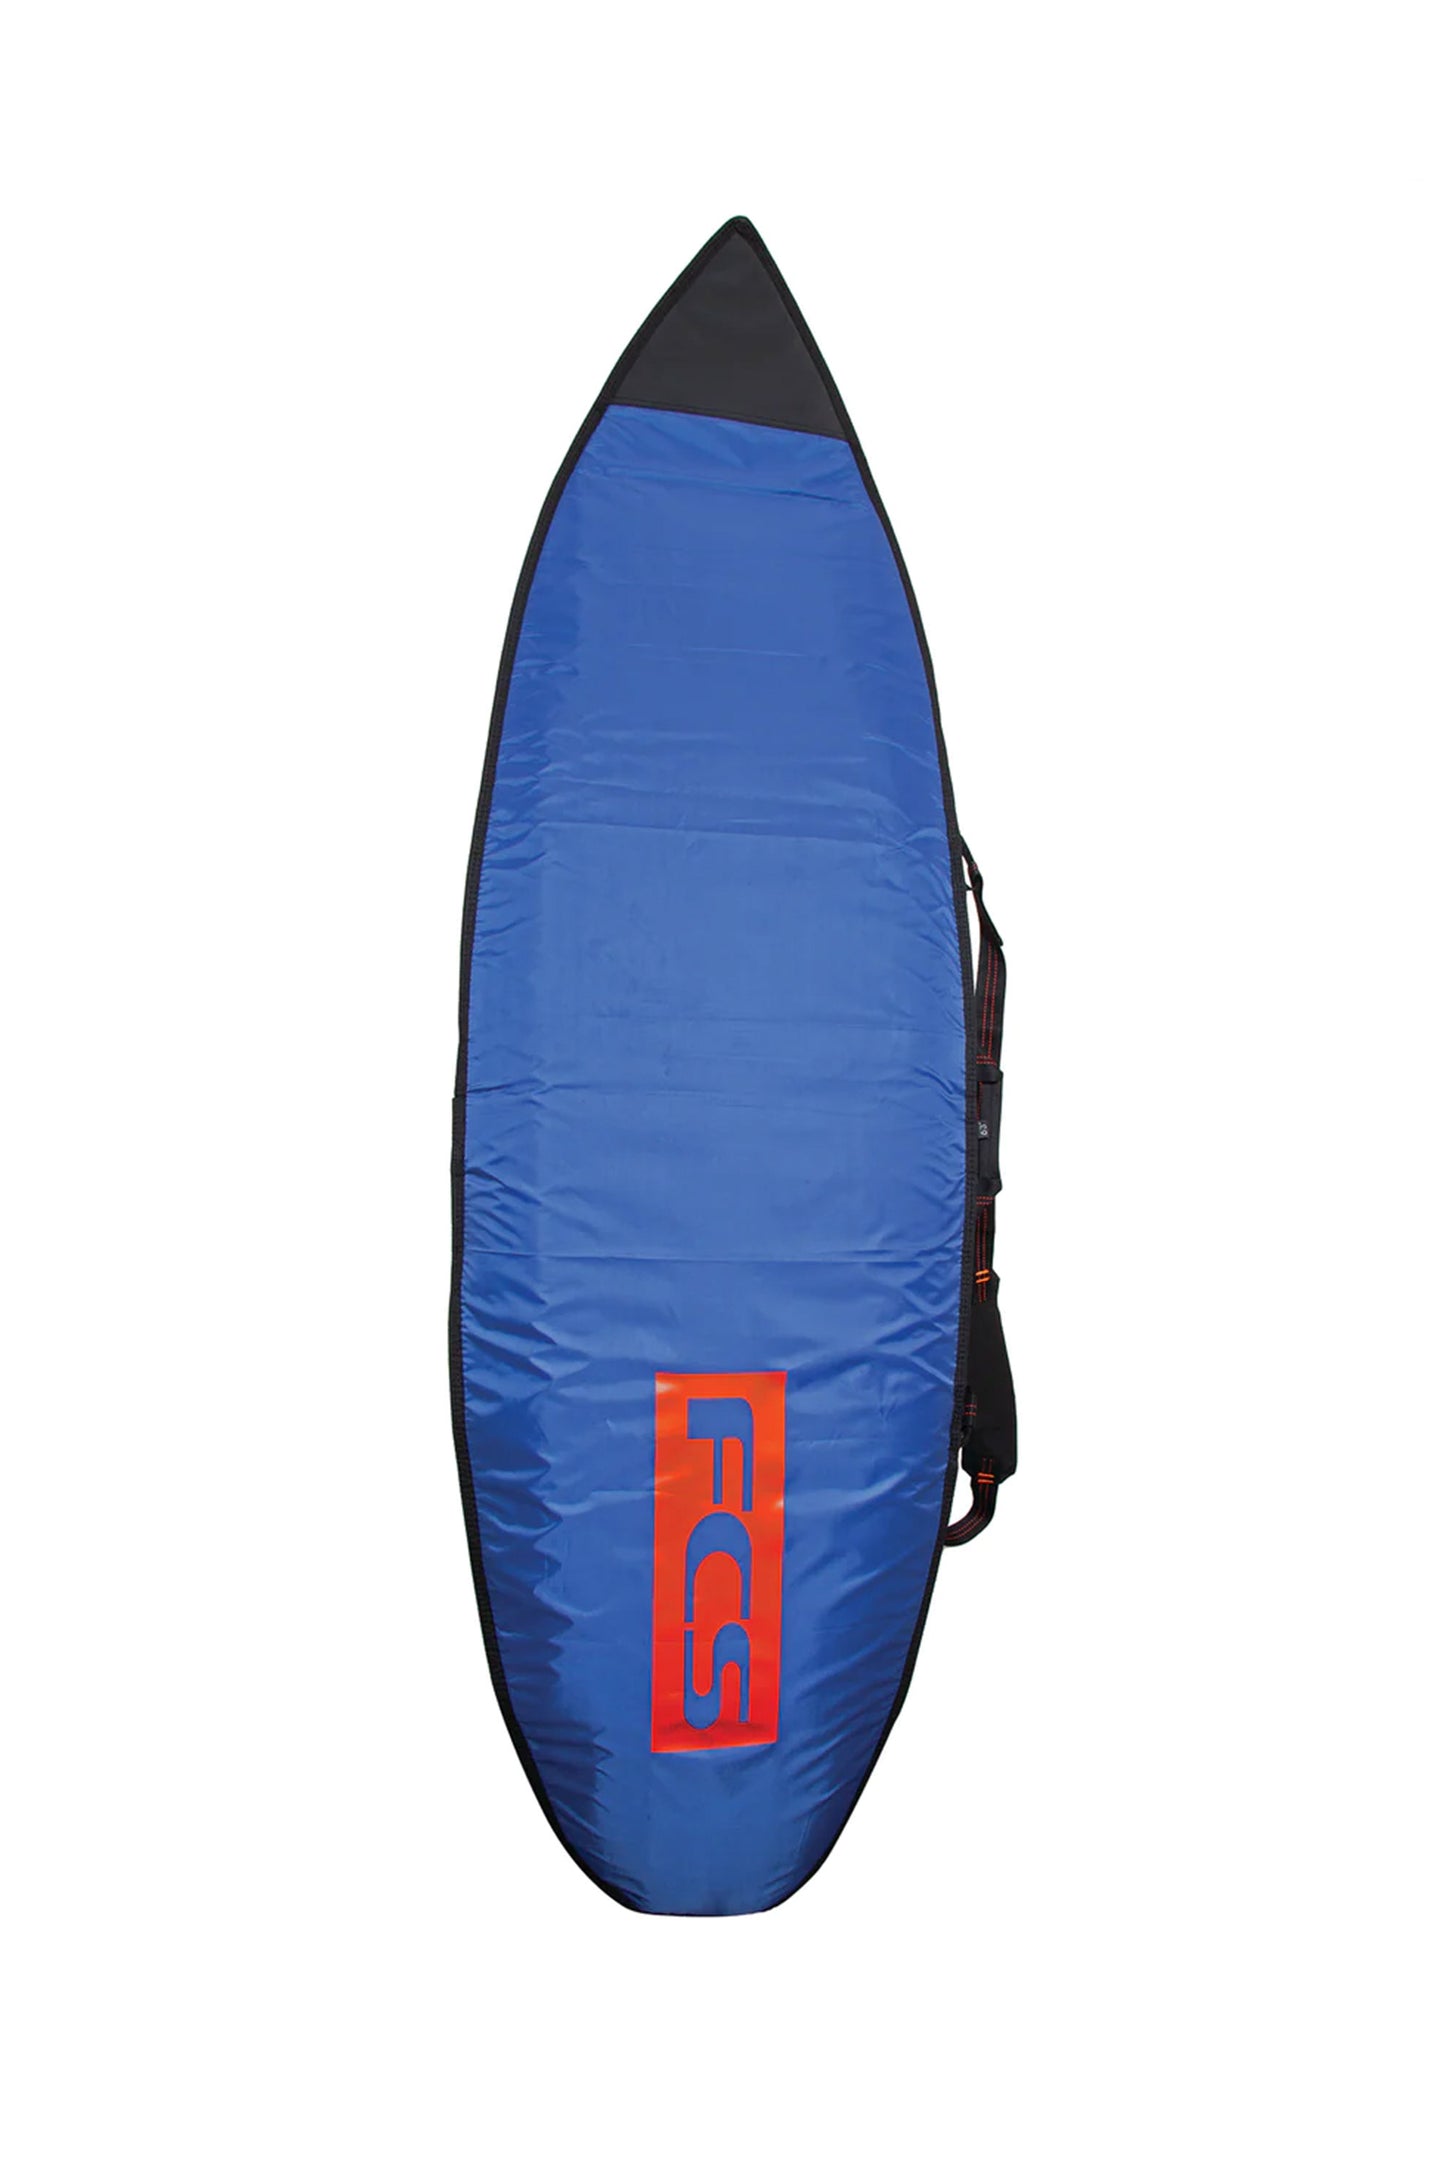    Pukas-Surf-Shop-fcs-boardbags-6.0-classic-all-purpose-blue